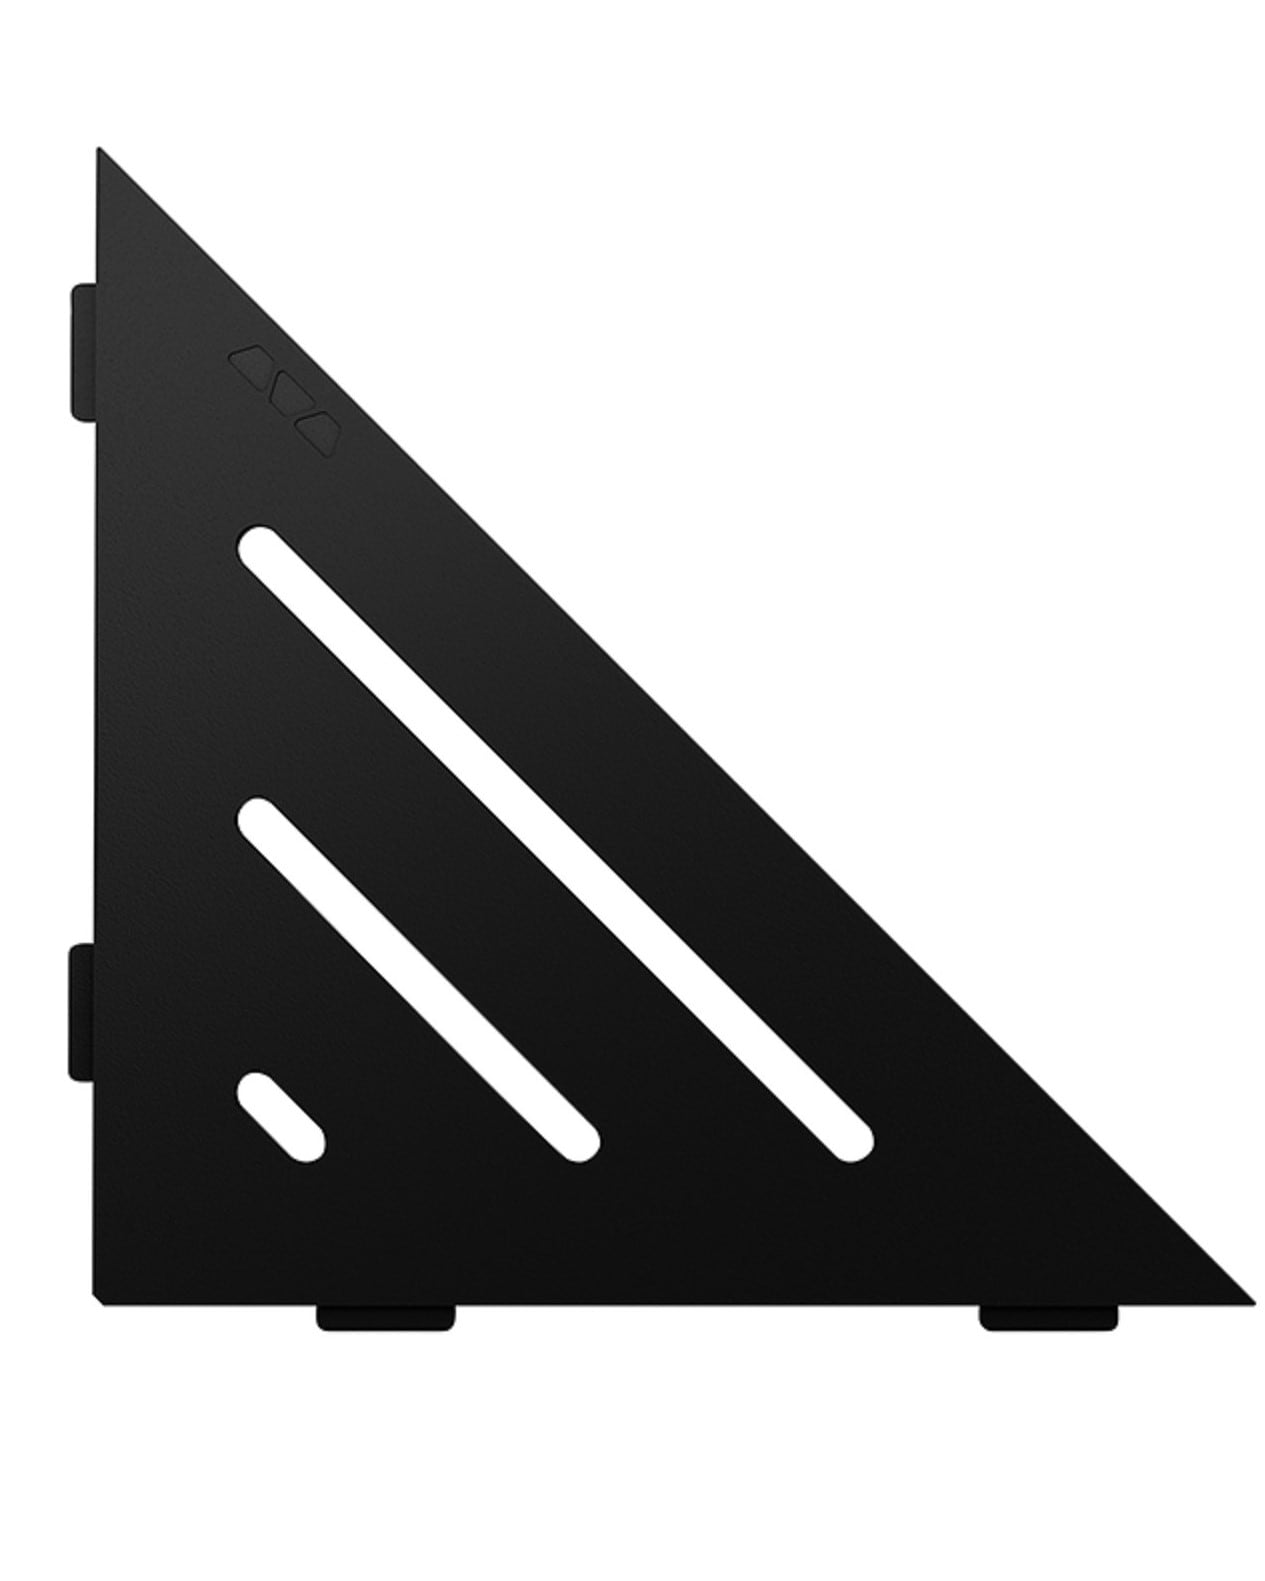 TI-SHELF Triangular Corner Shelf (Line), Dural